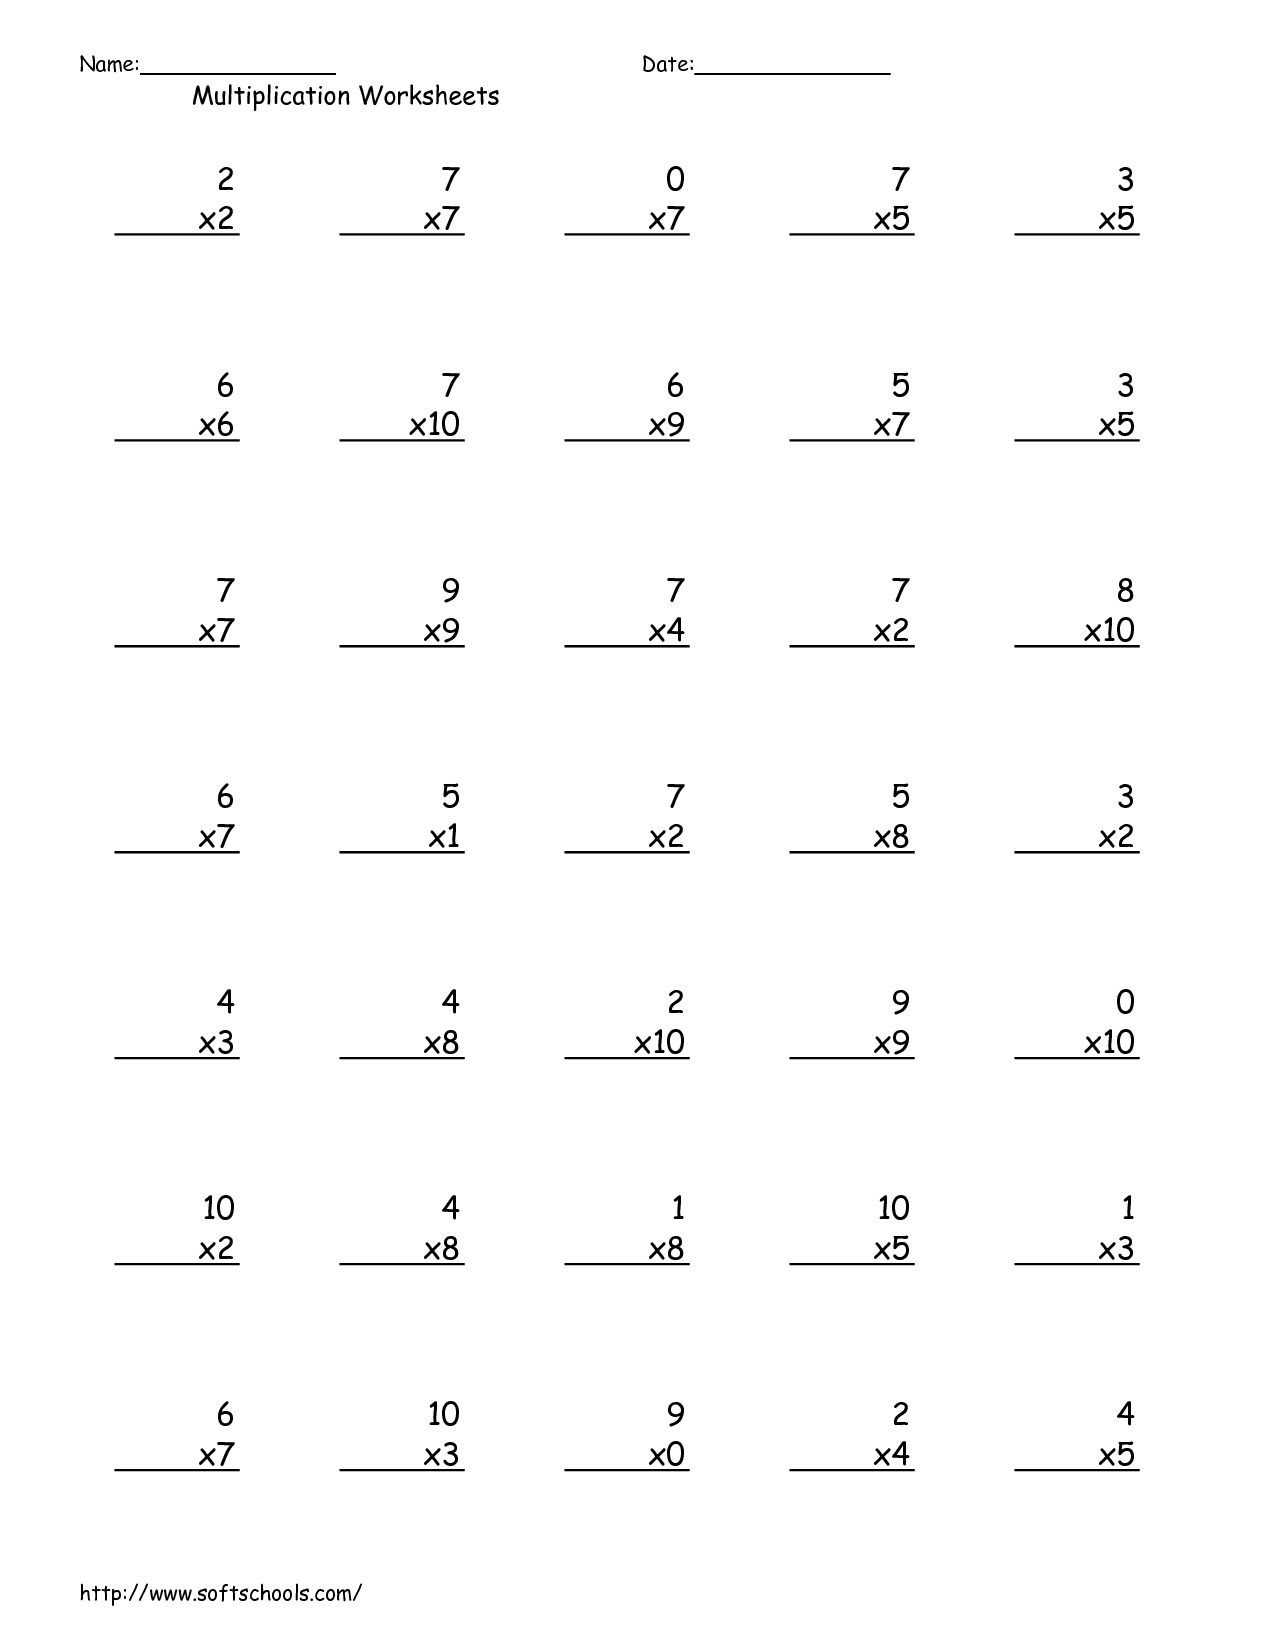 orangeflowerpatterns-26-4th-grade-multiplication-worksheets-1-12-gif